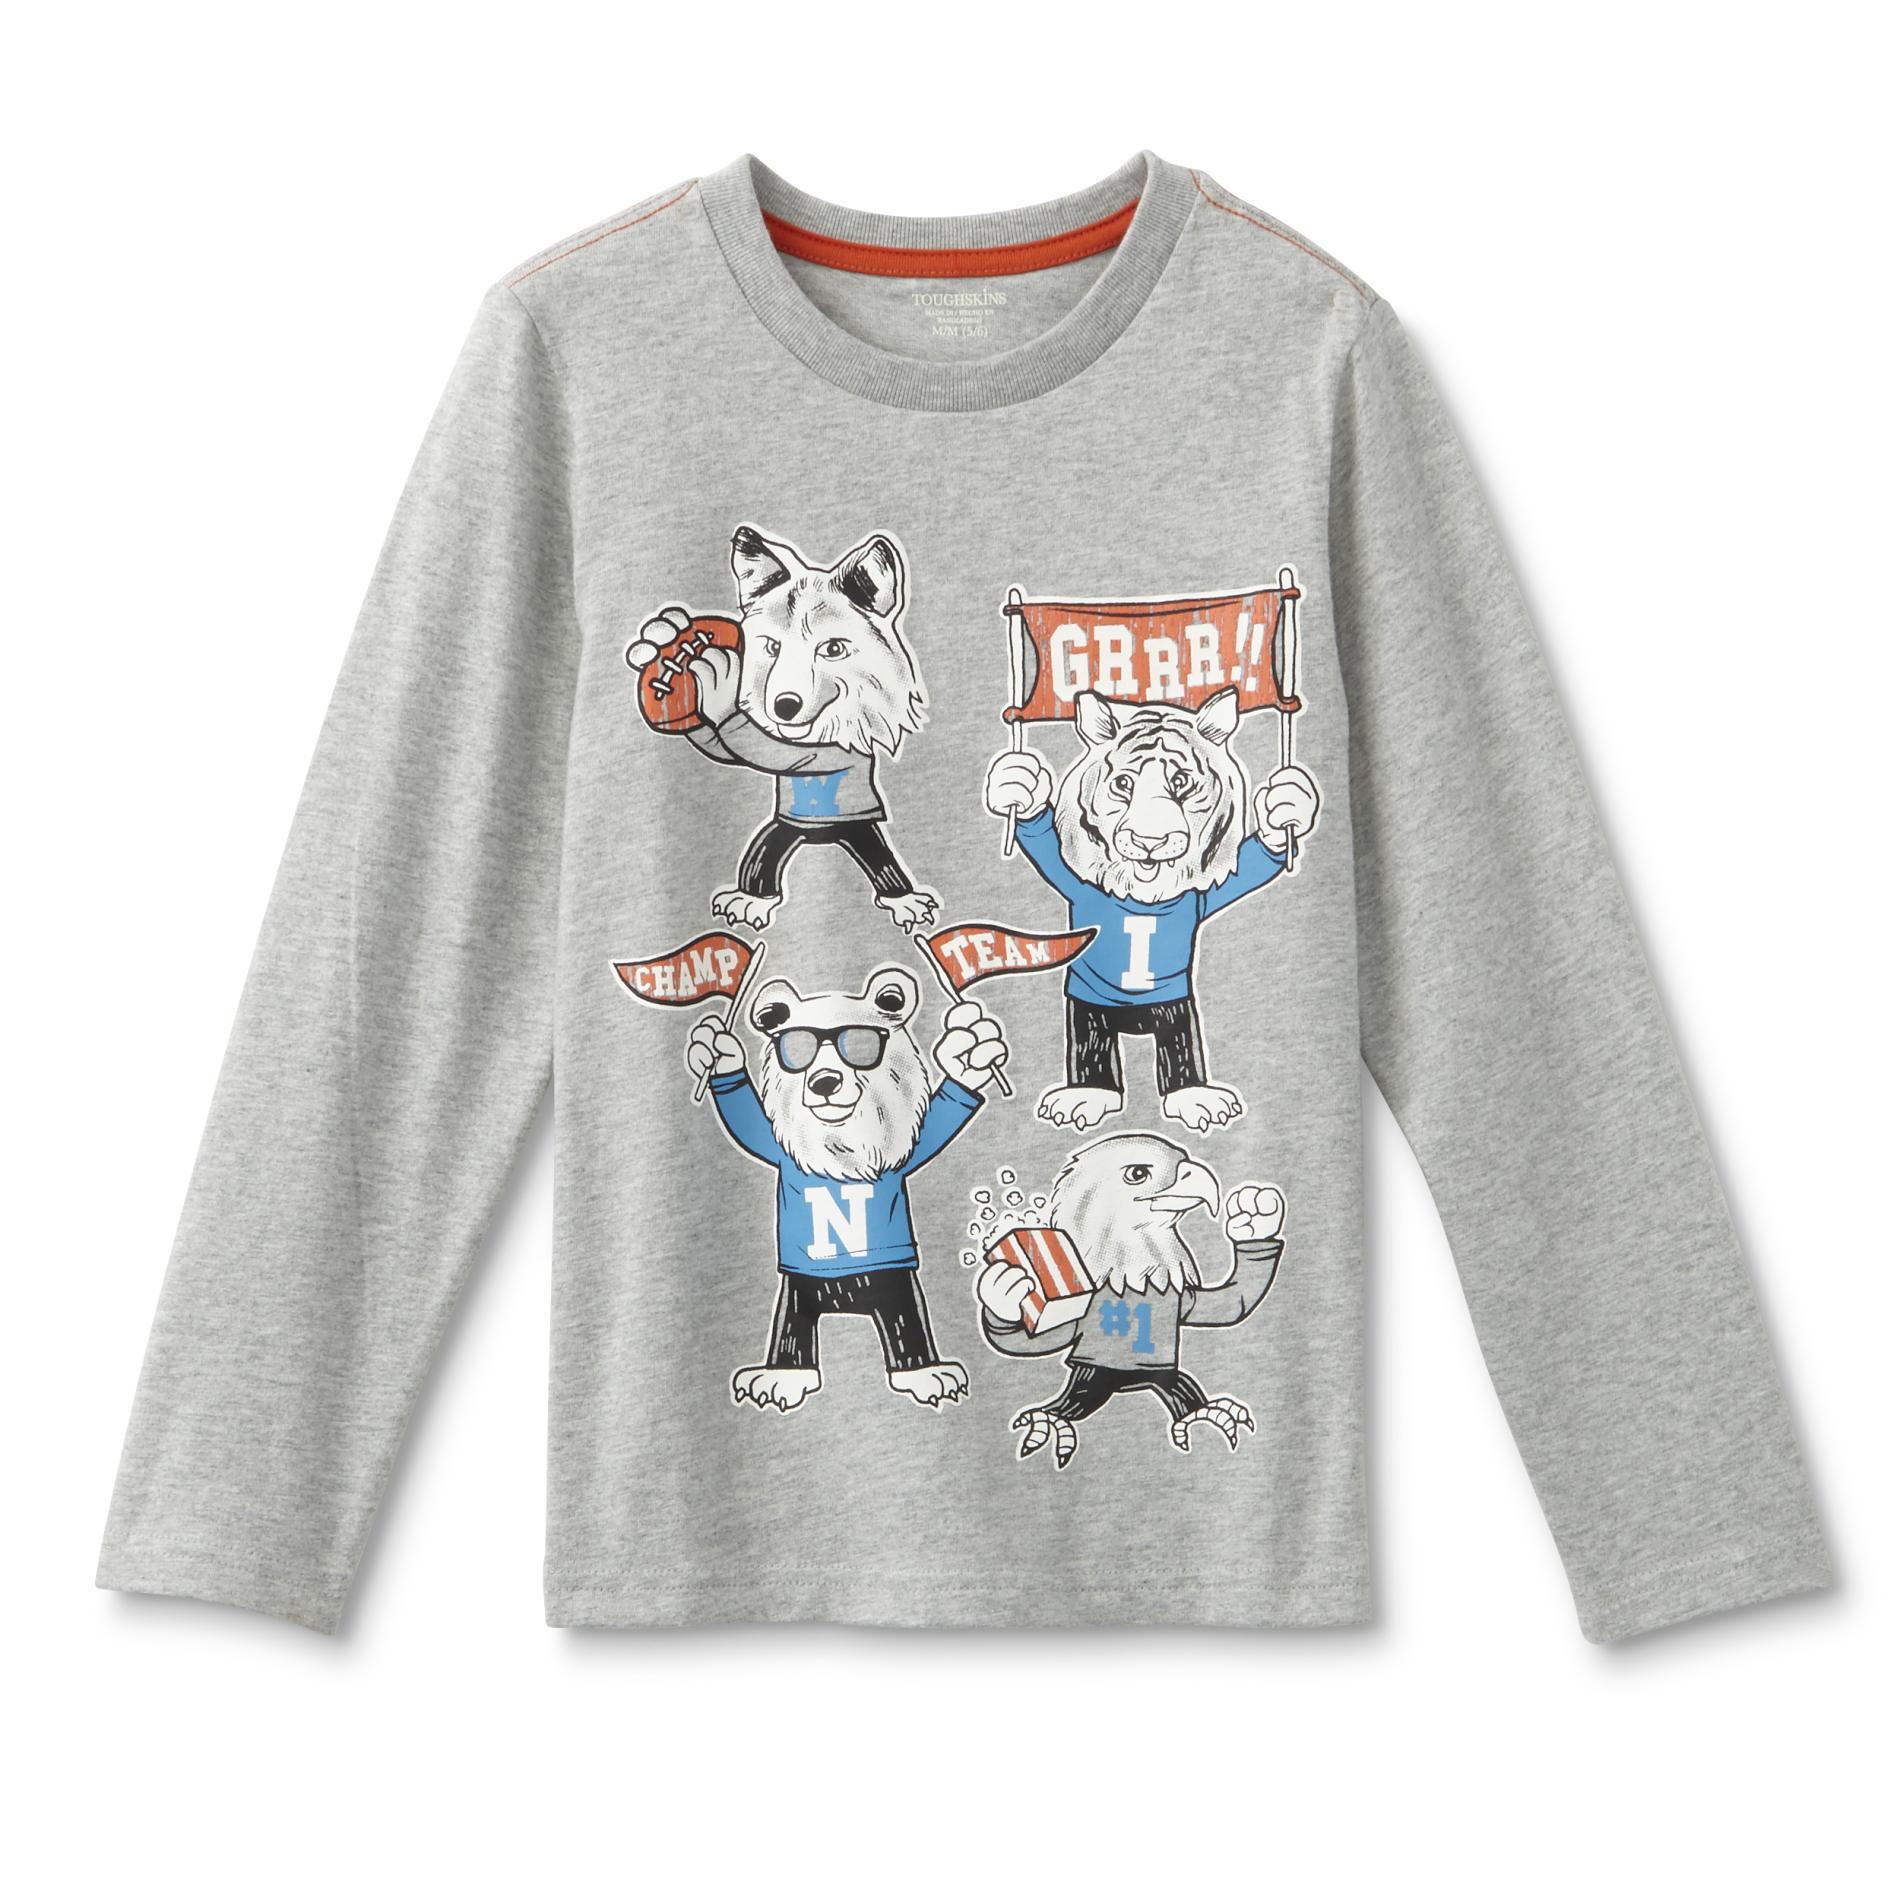 Toughskins Infant & Toddler Boy's Graphic T-Shirt - Mascots